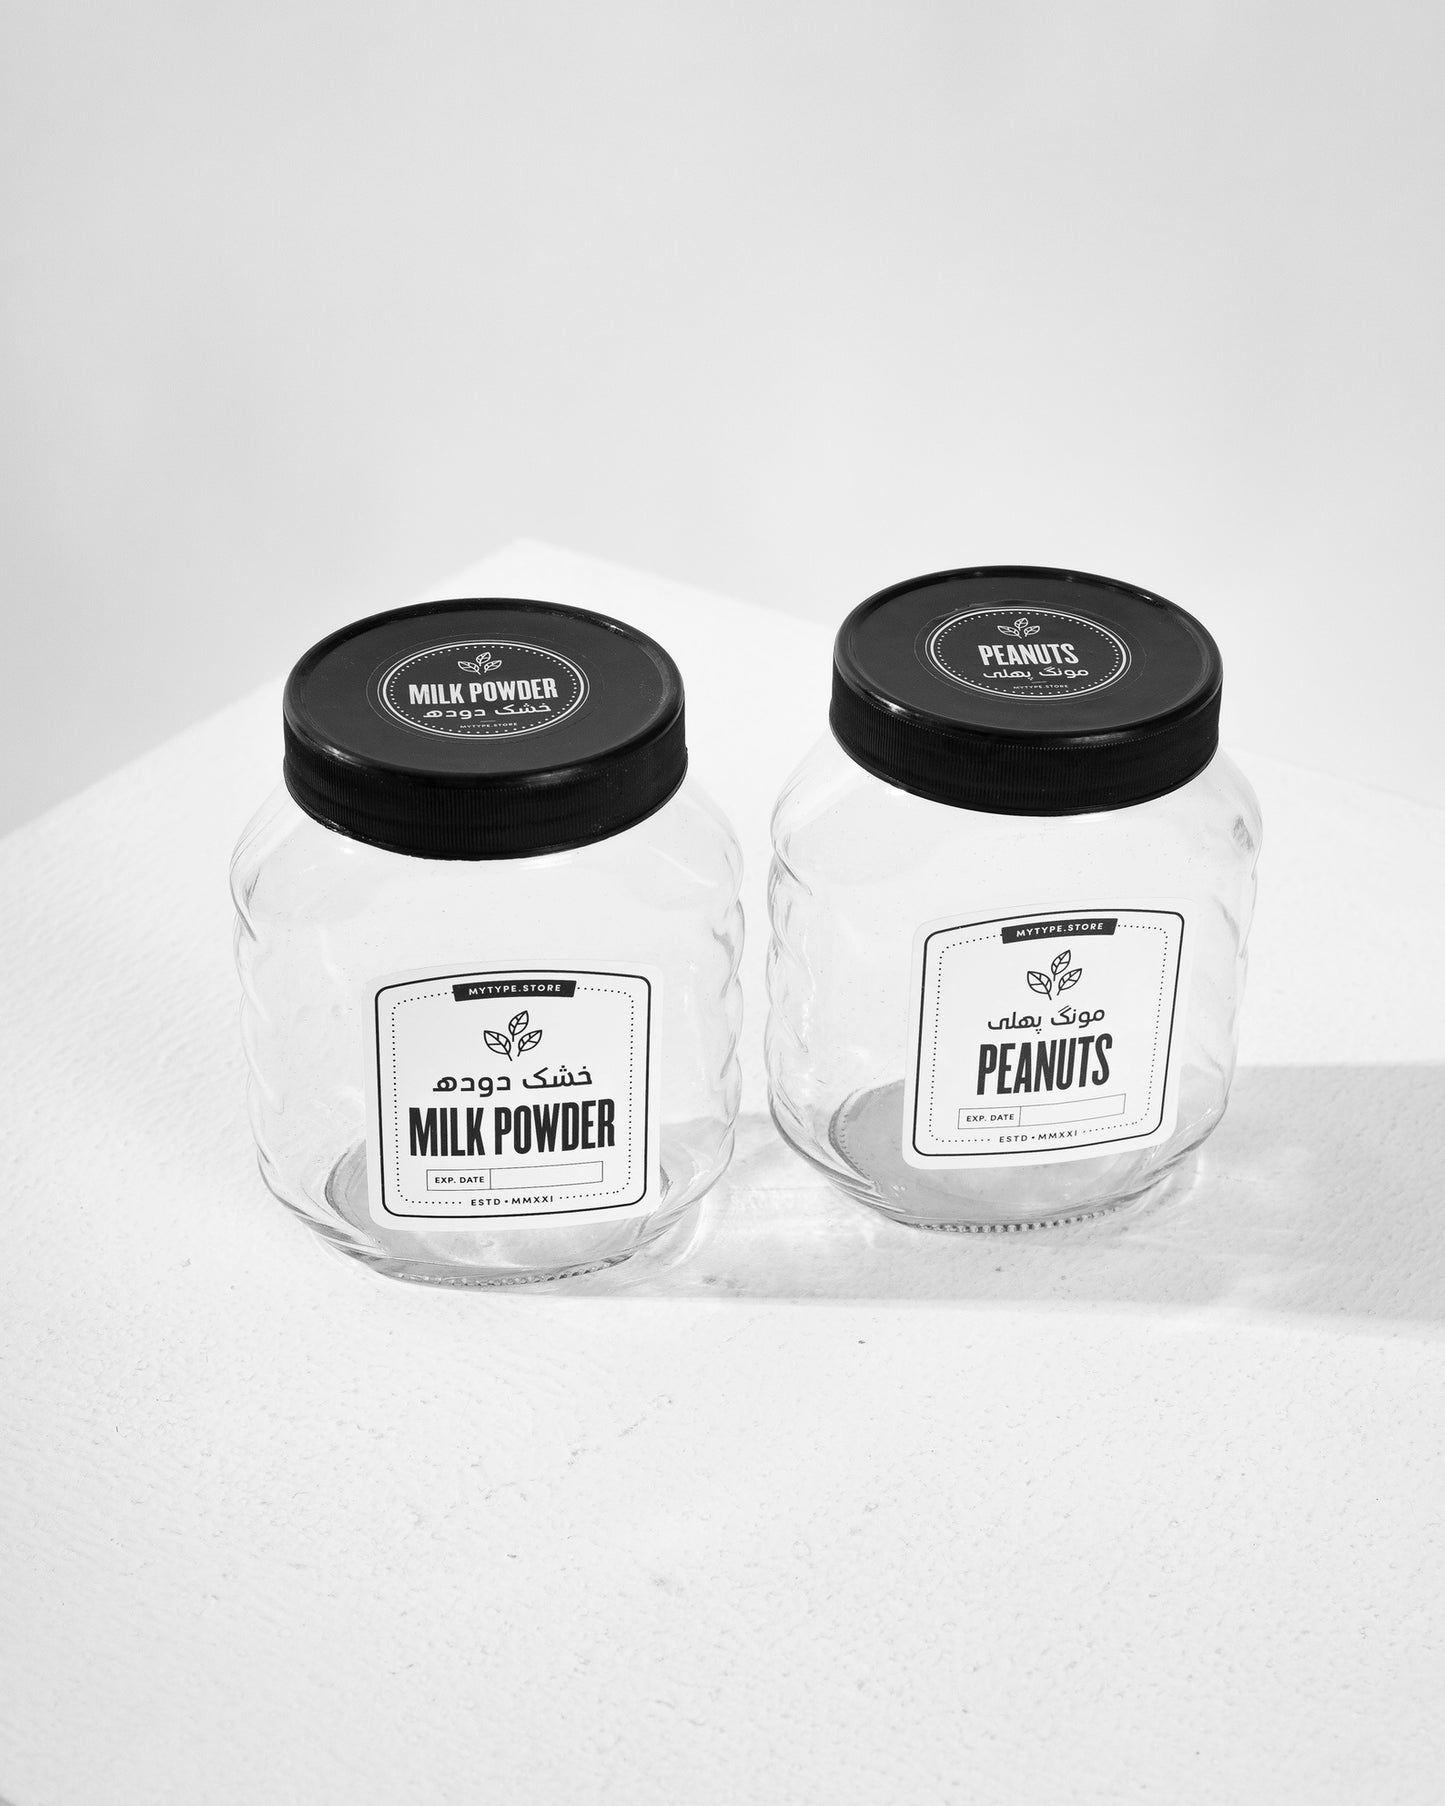 Oval Pantry Glass Jar black lid - 650ml